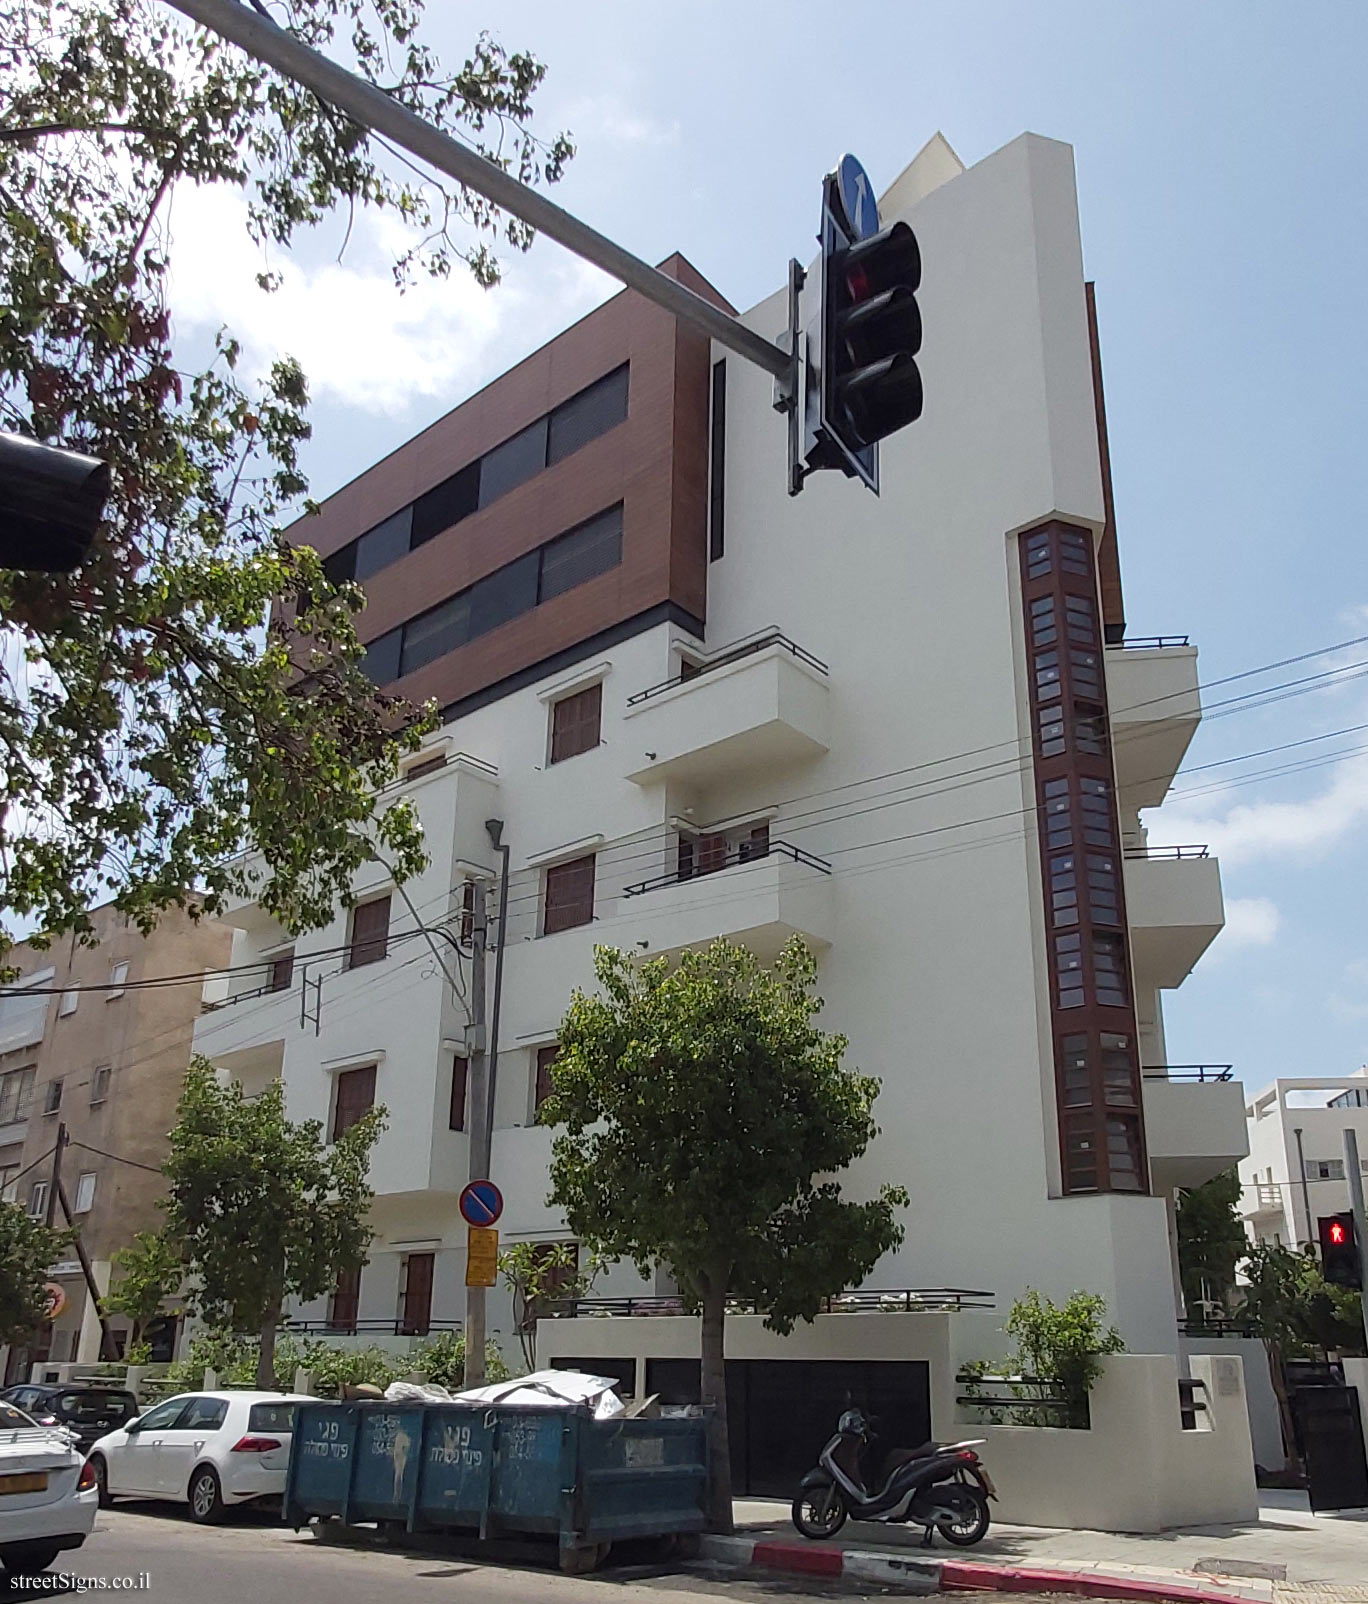 Tel Aviv - buildings for conservation - Yehuda Halevi 97, c/r Mazeh 50